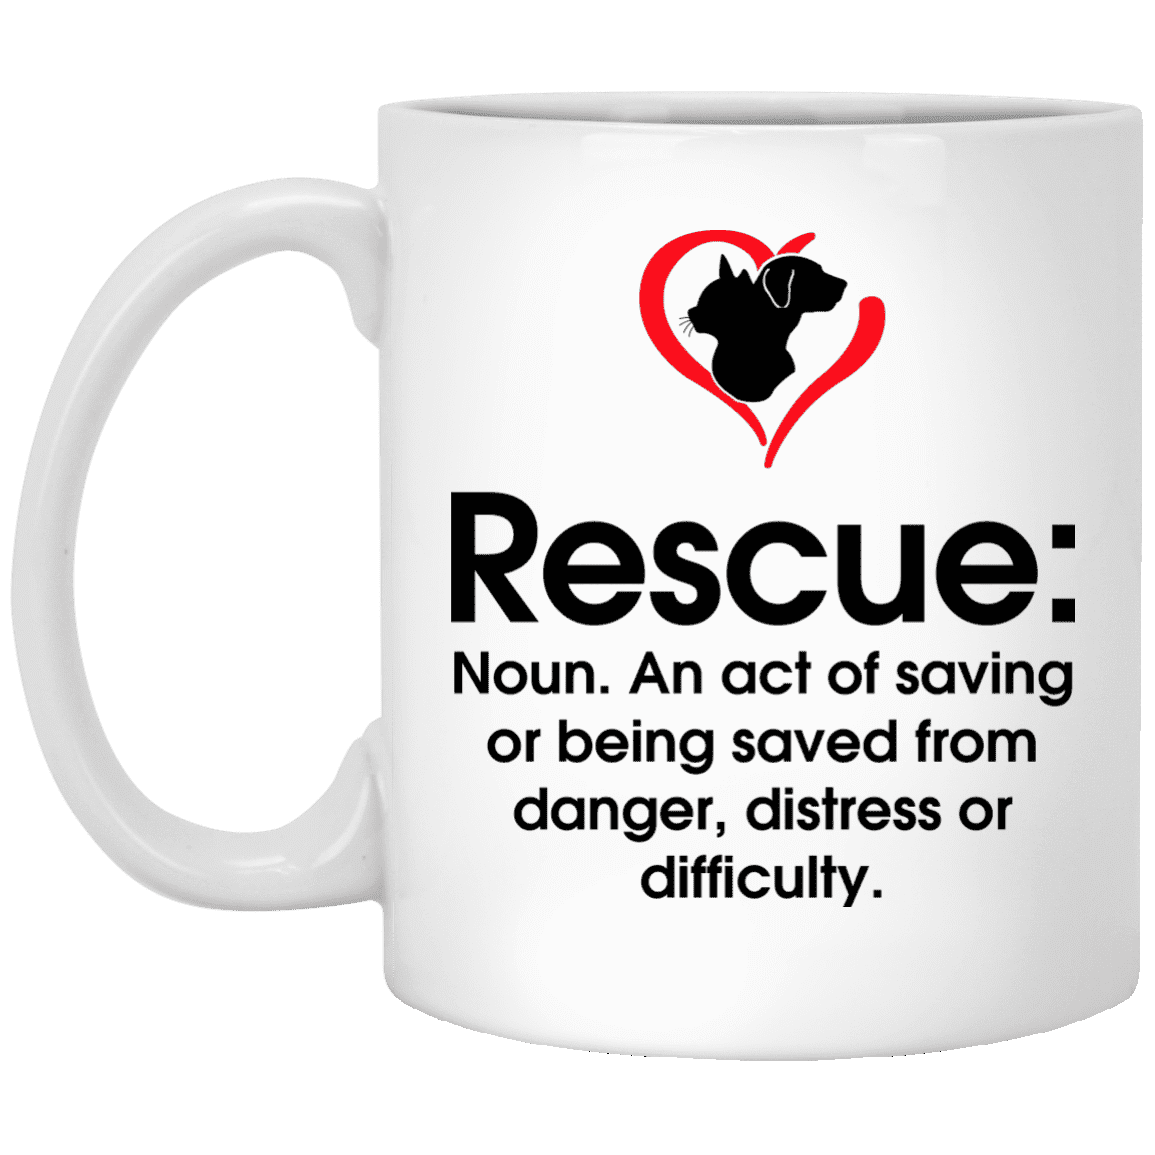 Rescue Noun - Mugs.